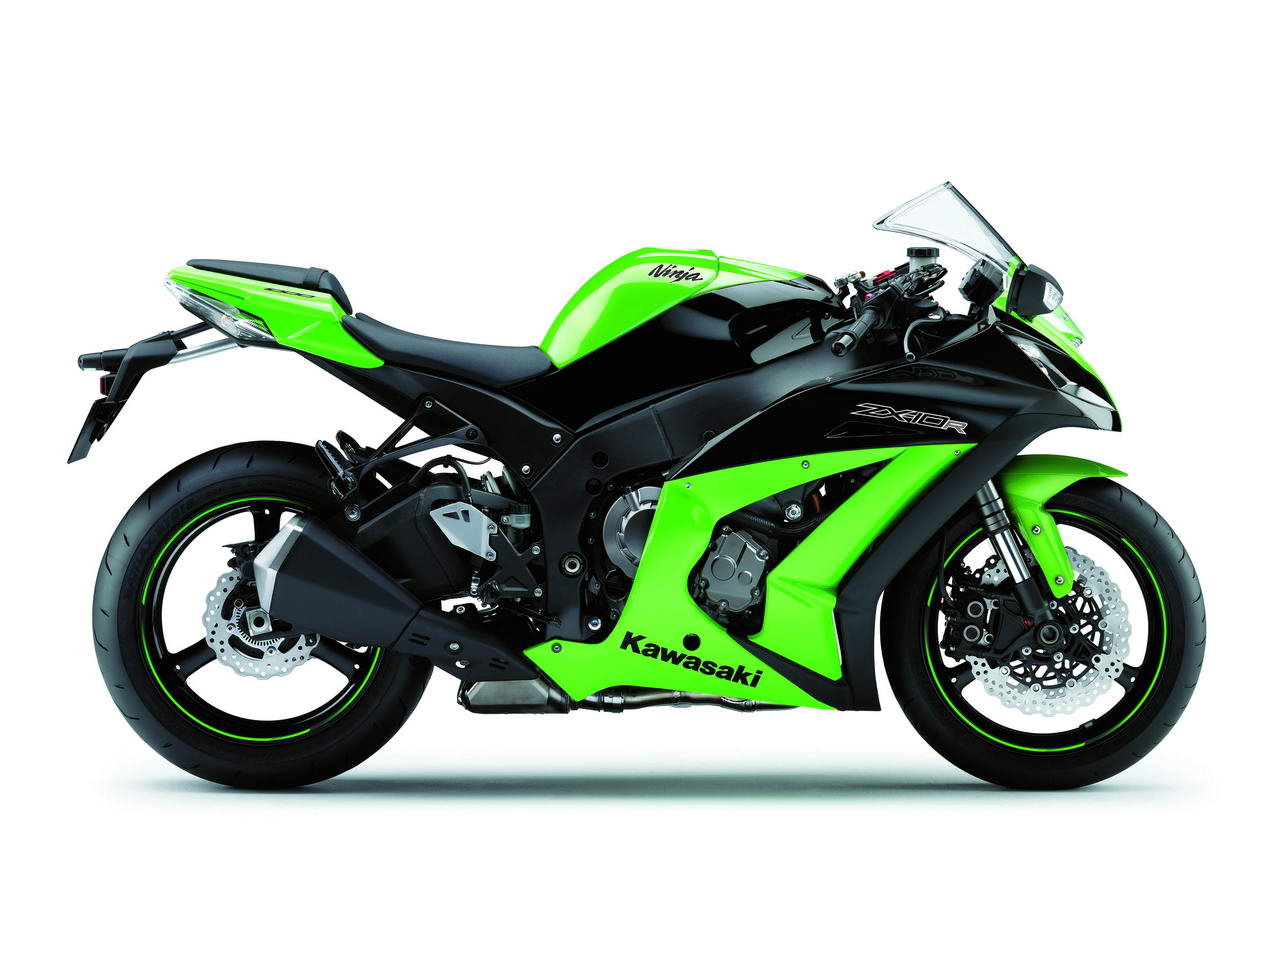 Listino Kawasaki Versys ABS Granturismo on-off - image 15515_kawasaki-ninjazx-10r on https://moto.motori.net